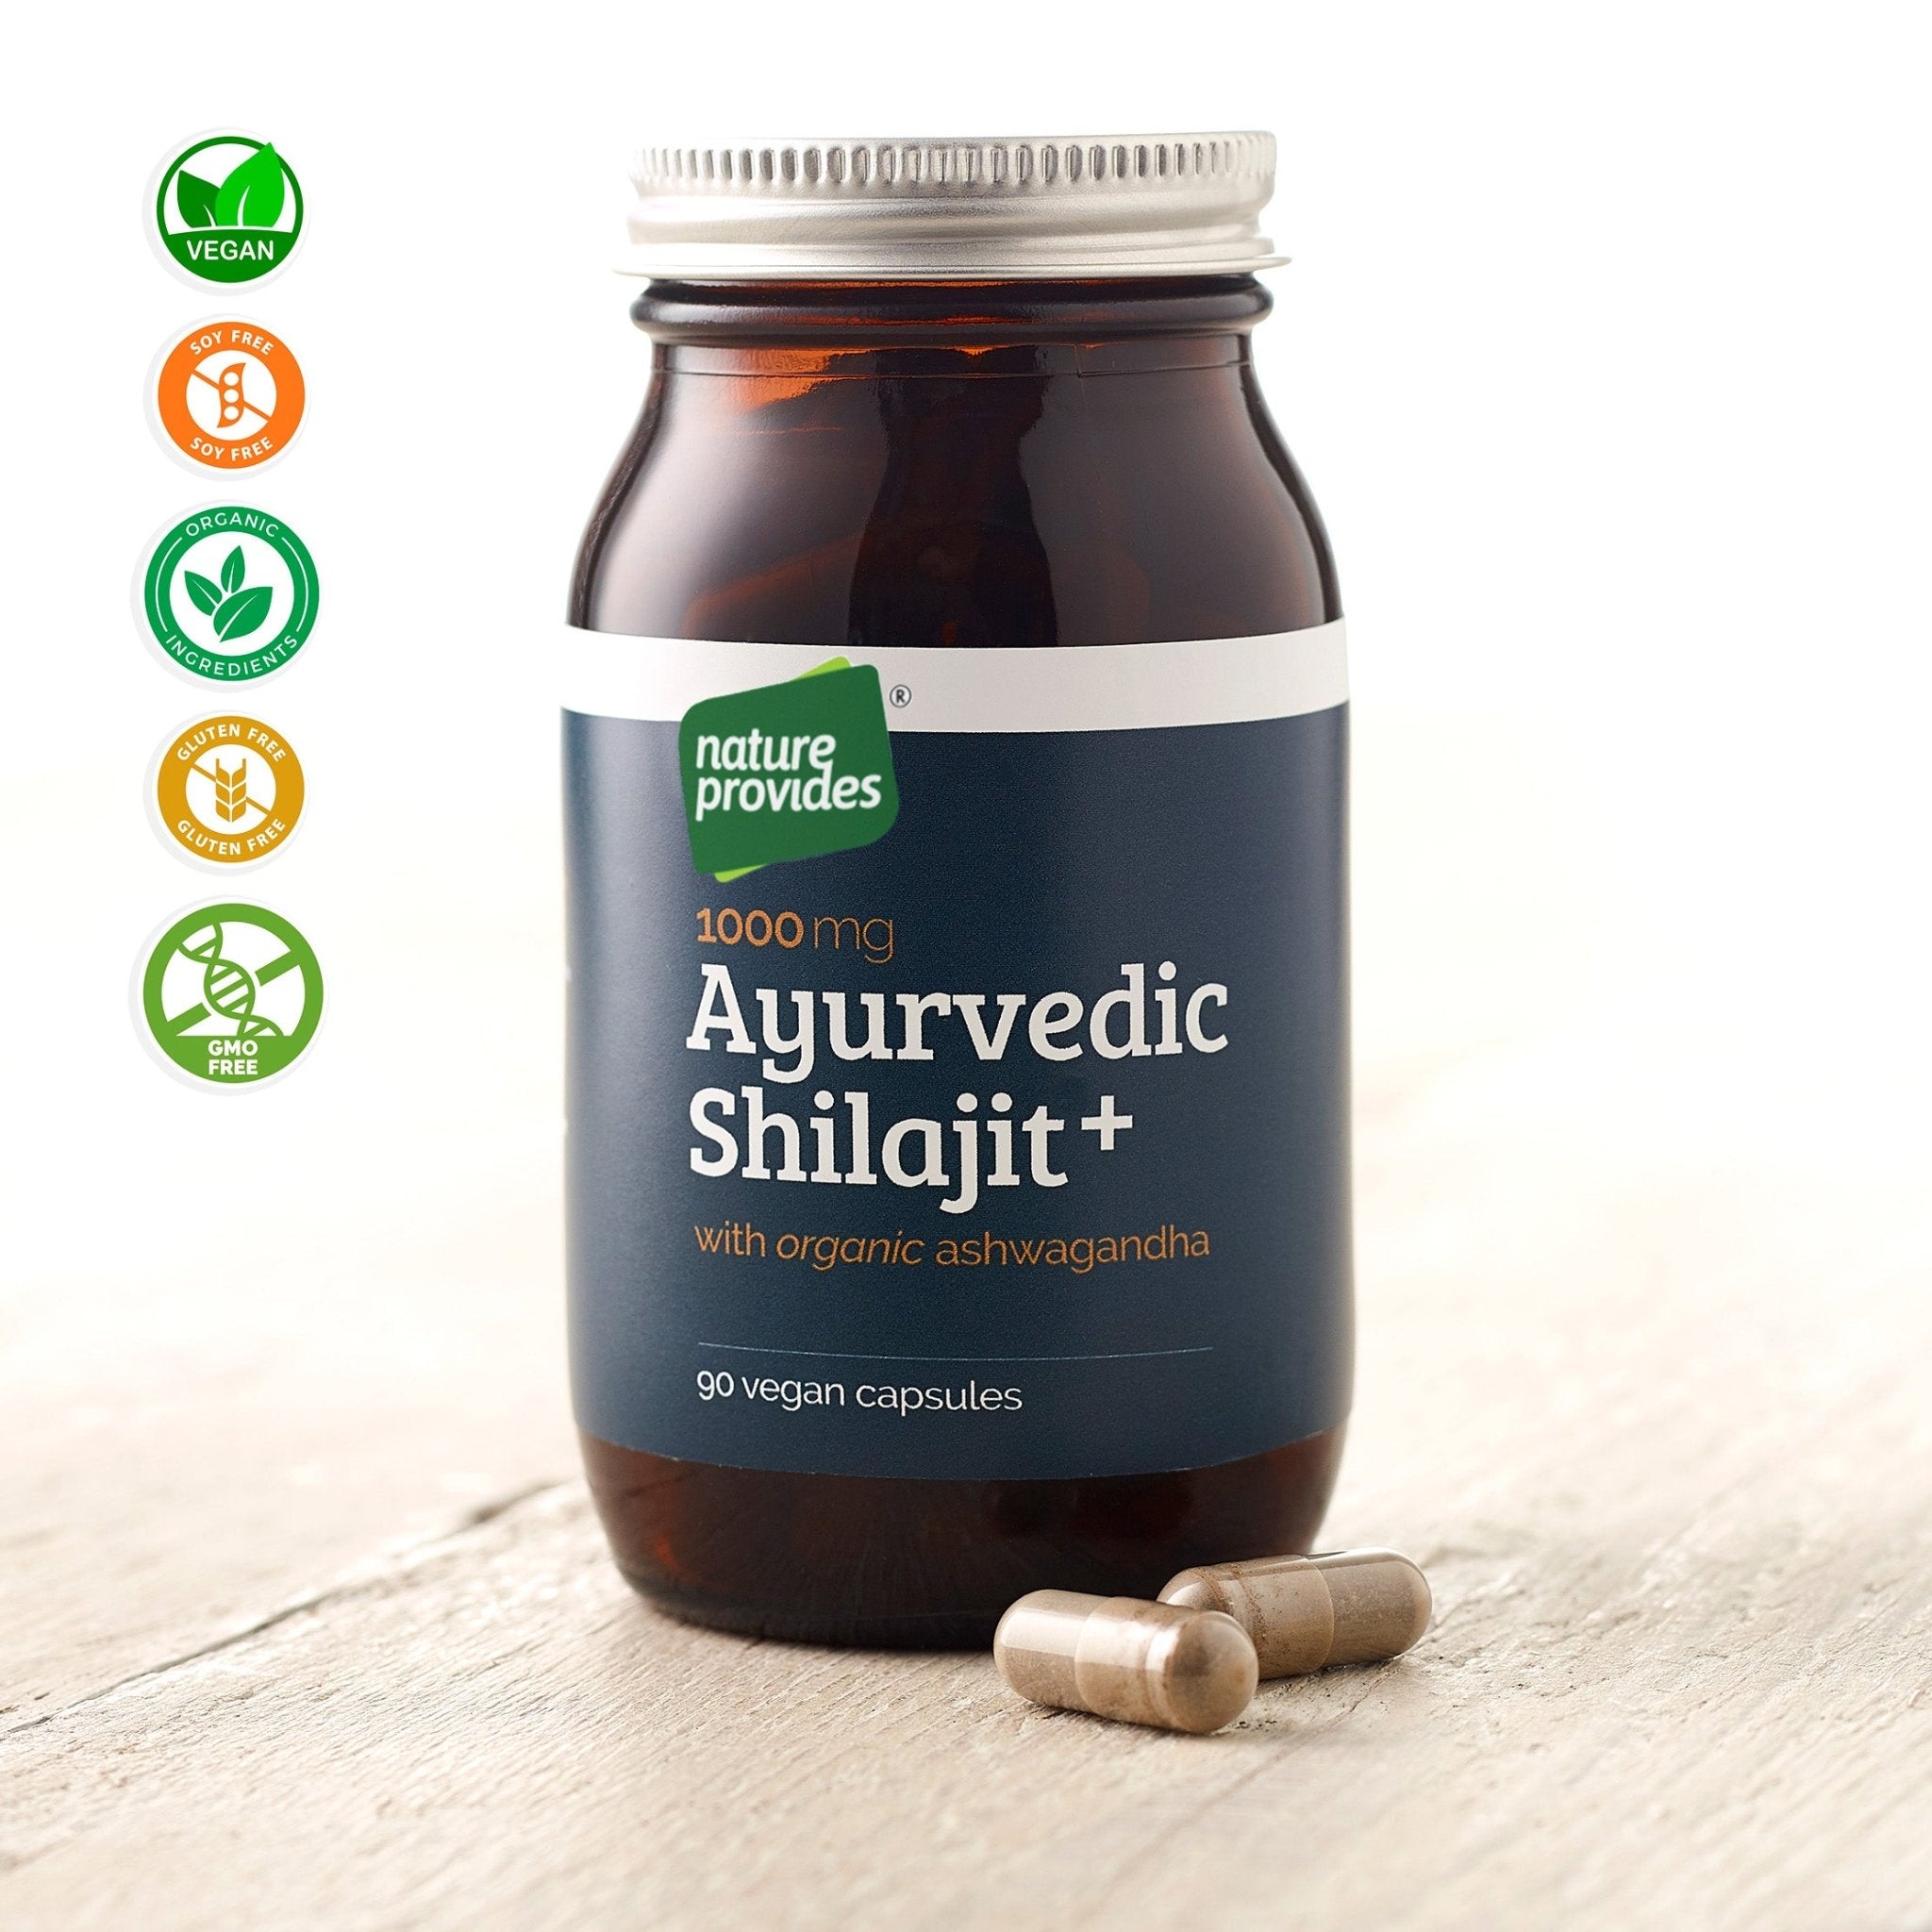 Ayurvedic Shilajit (1000mg) and Organic Ashwagandha Root - 90 Vegan Capsules - Nature Provides